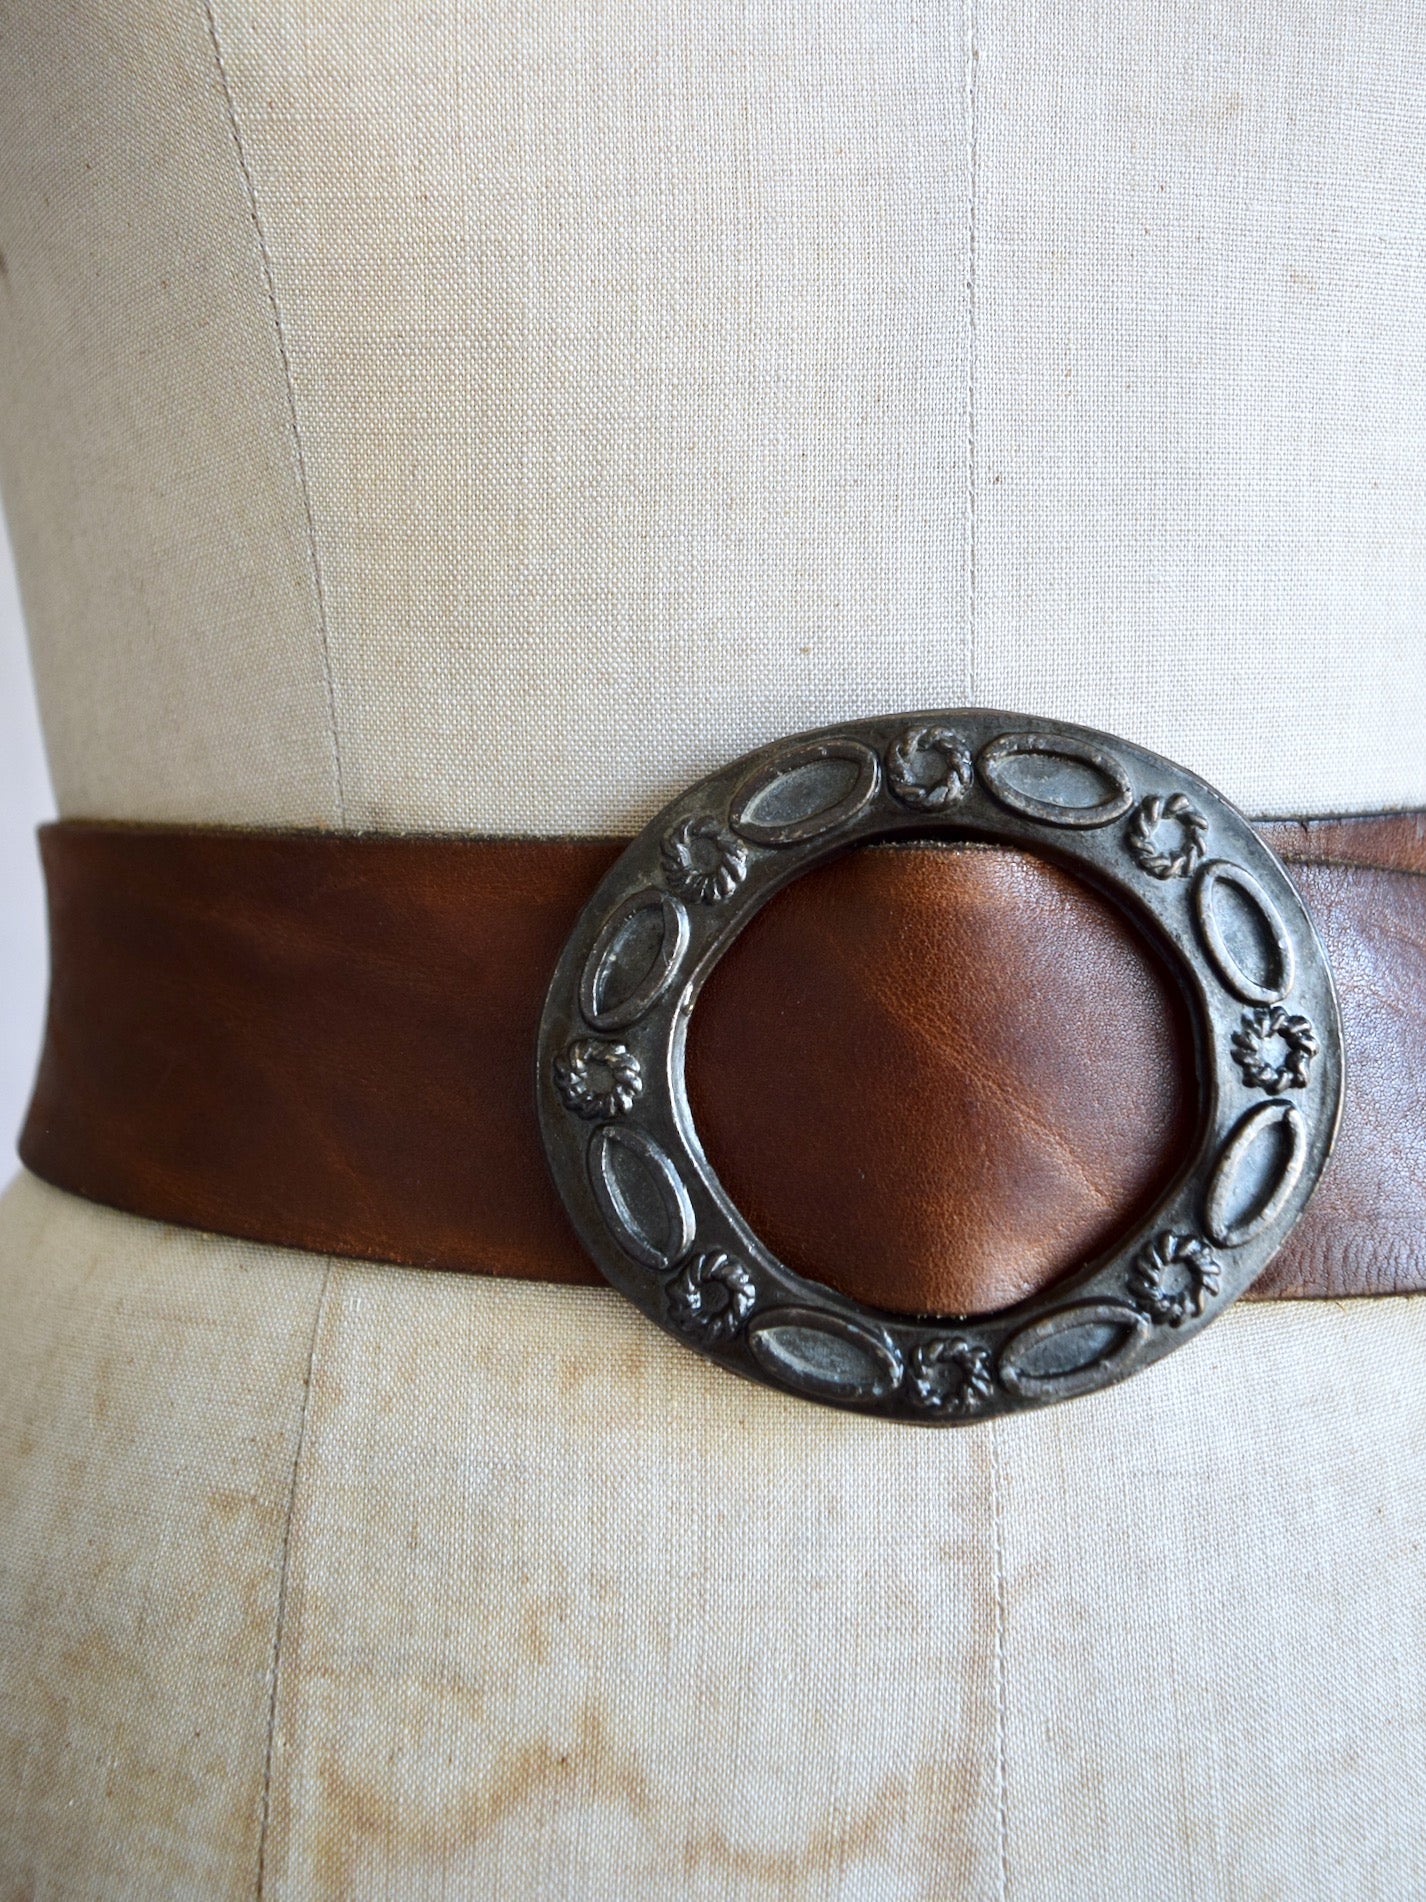 Vintage brown leather belt w/ gold buckle